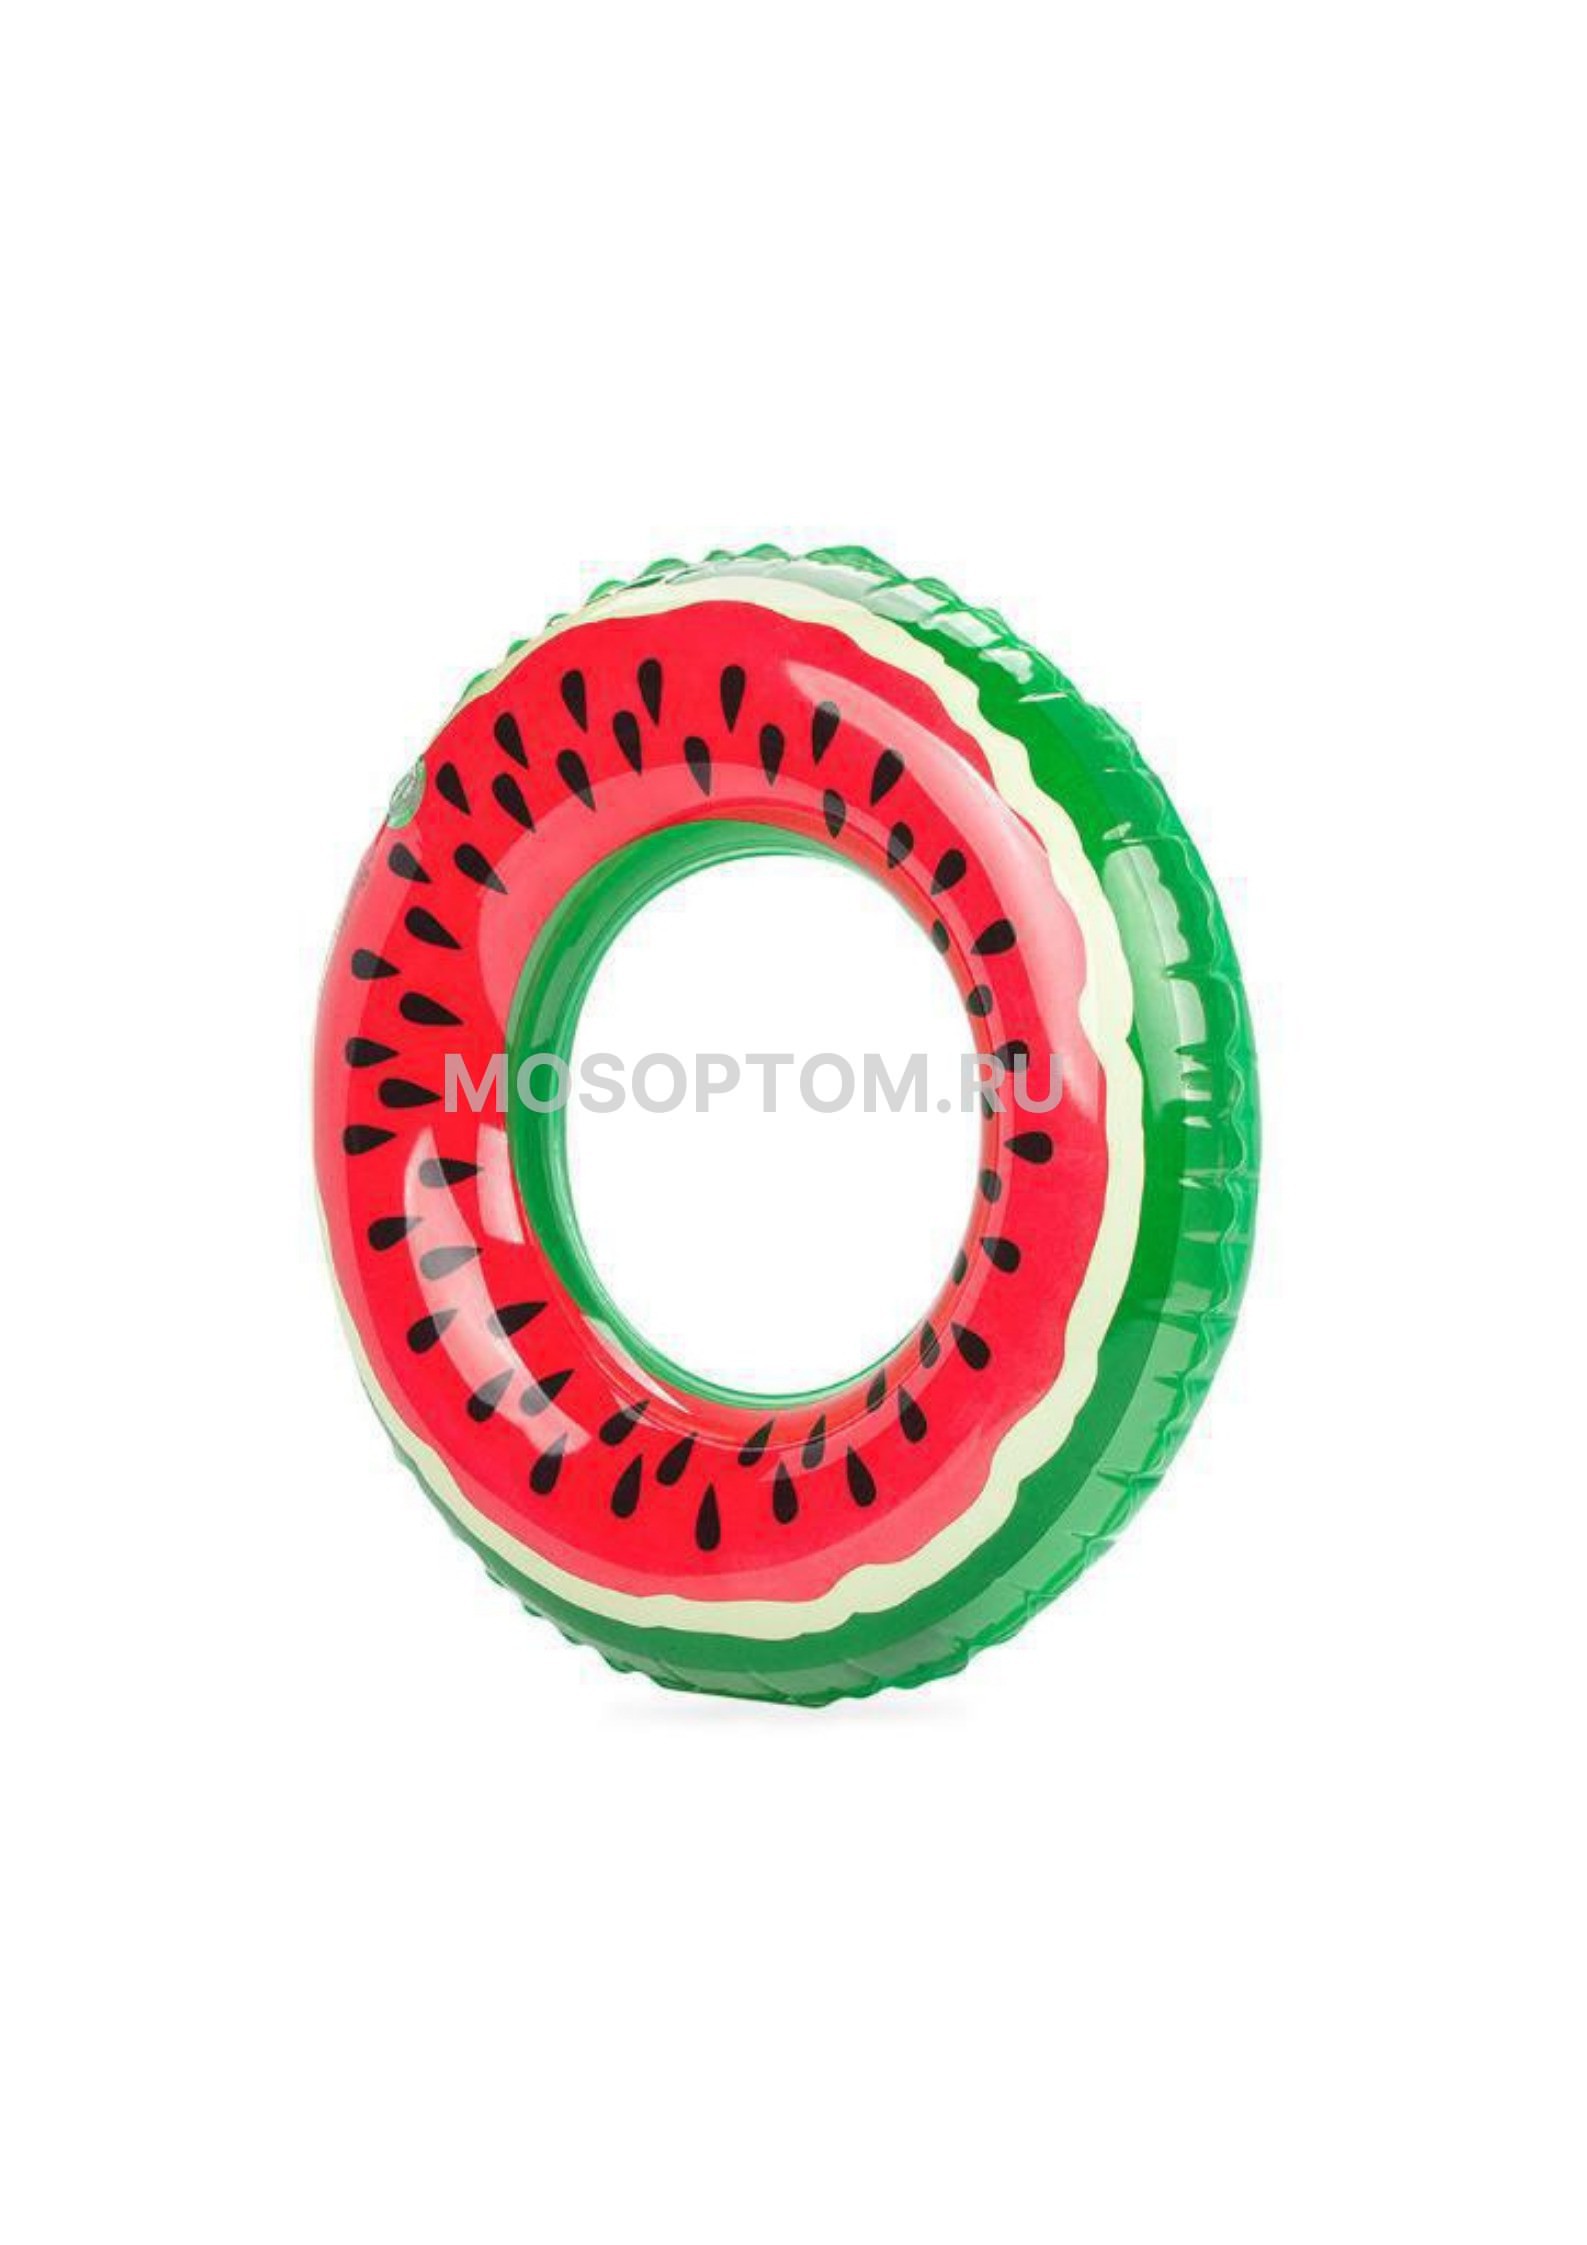 Надувной круг Арбуз Watermelon 80см оптом - Фото №2